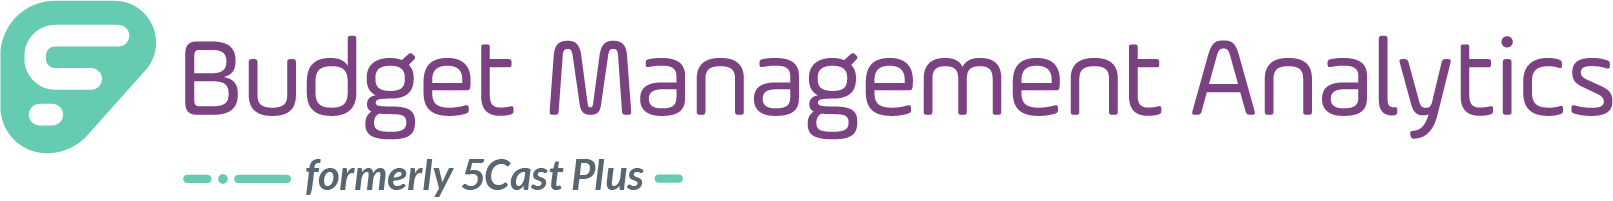 Logo: Budget Management Analytics, formerly 5Cast Plus